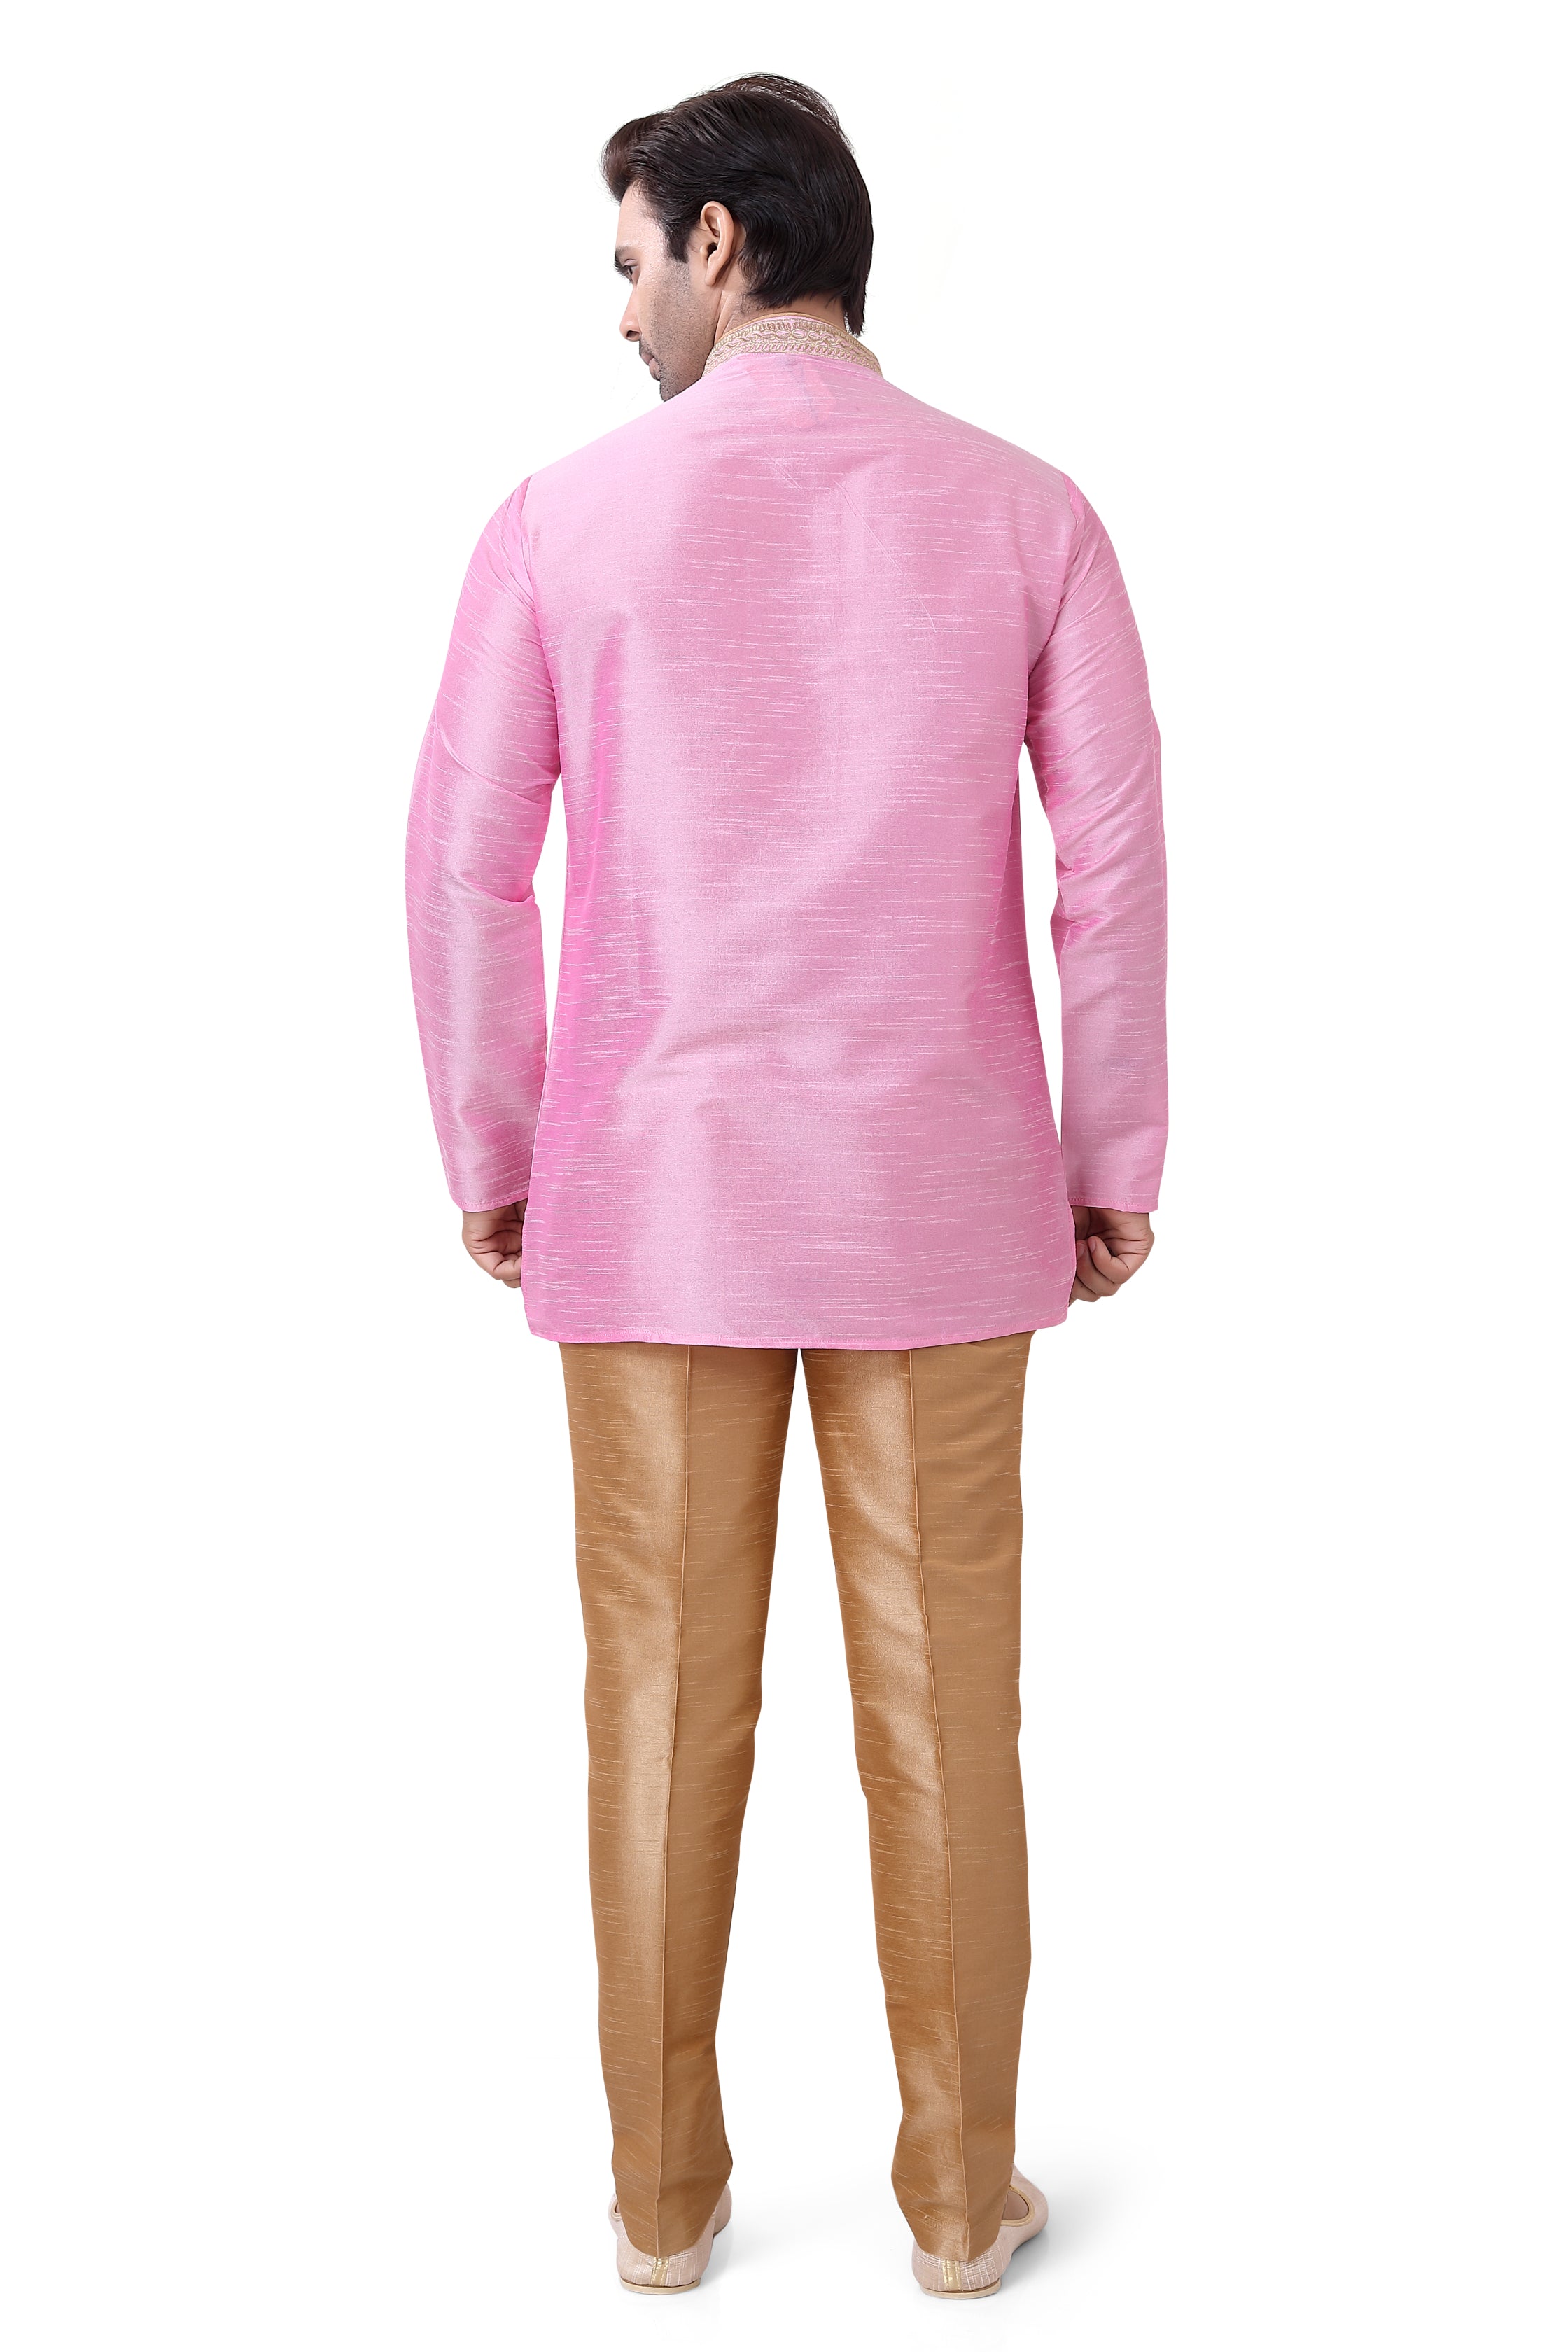 Banarasi Dupion Silk Short Kurta with embroidery in Pink color - Premium kurta pajama from Dapper Ethnic - Just $49! Shop now at Dulhan Exclusives